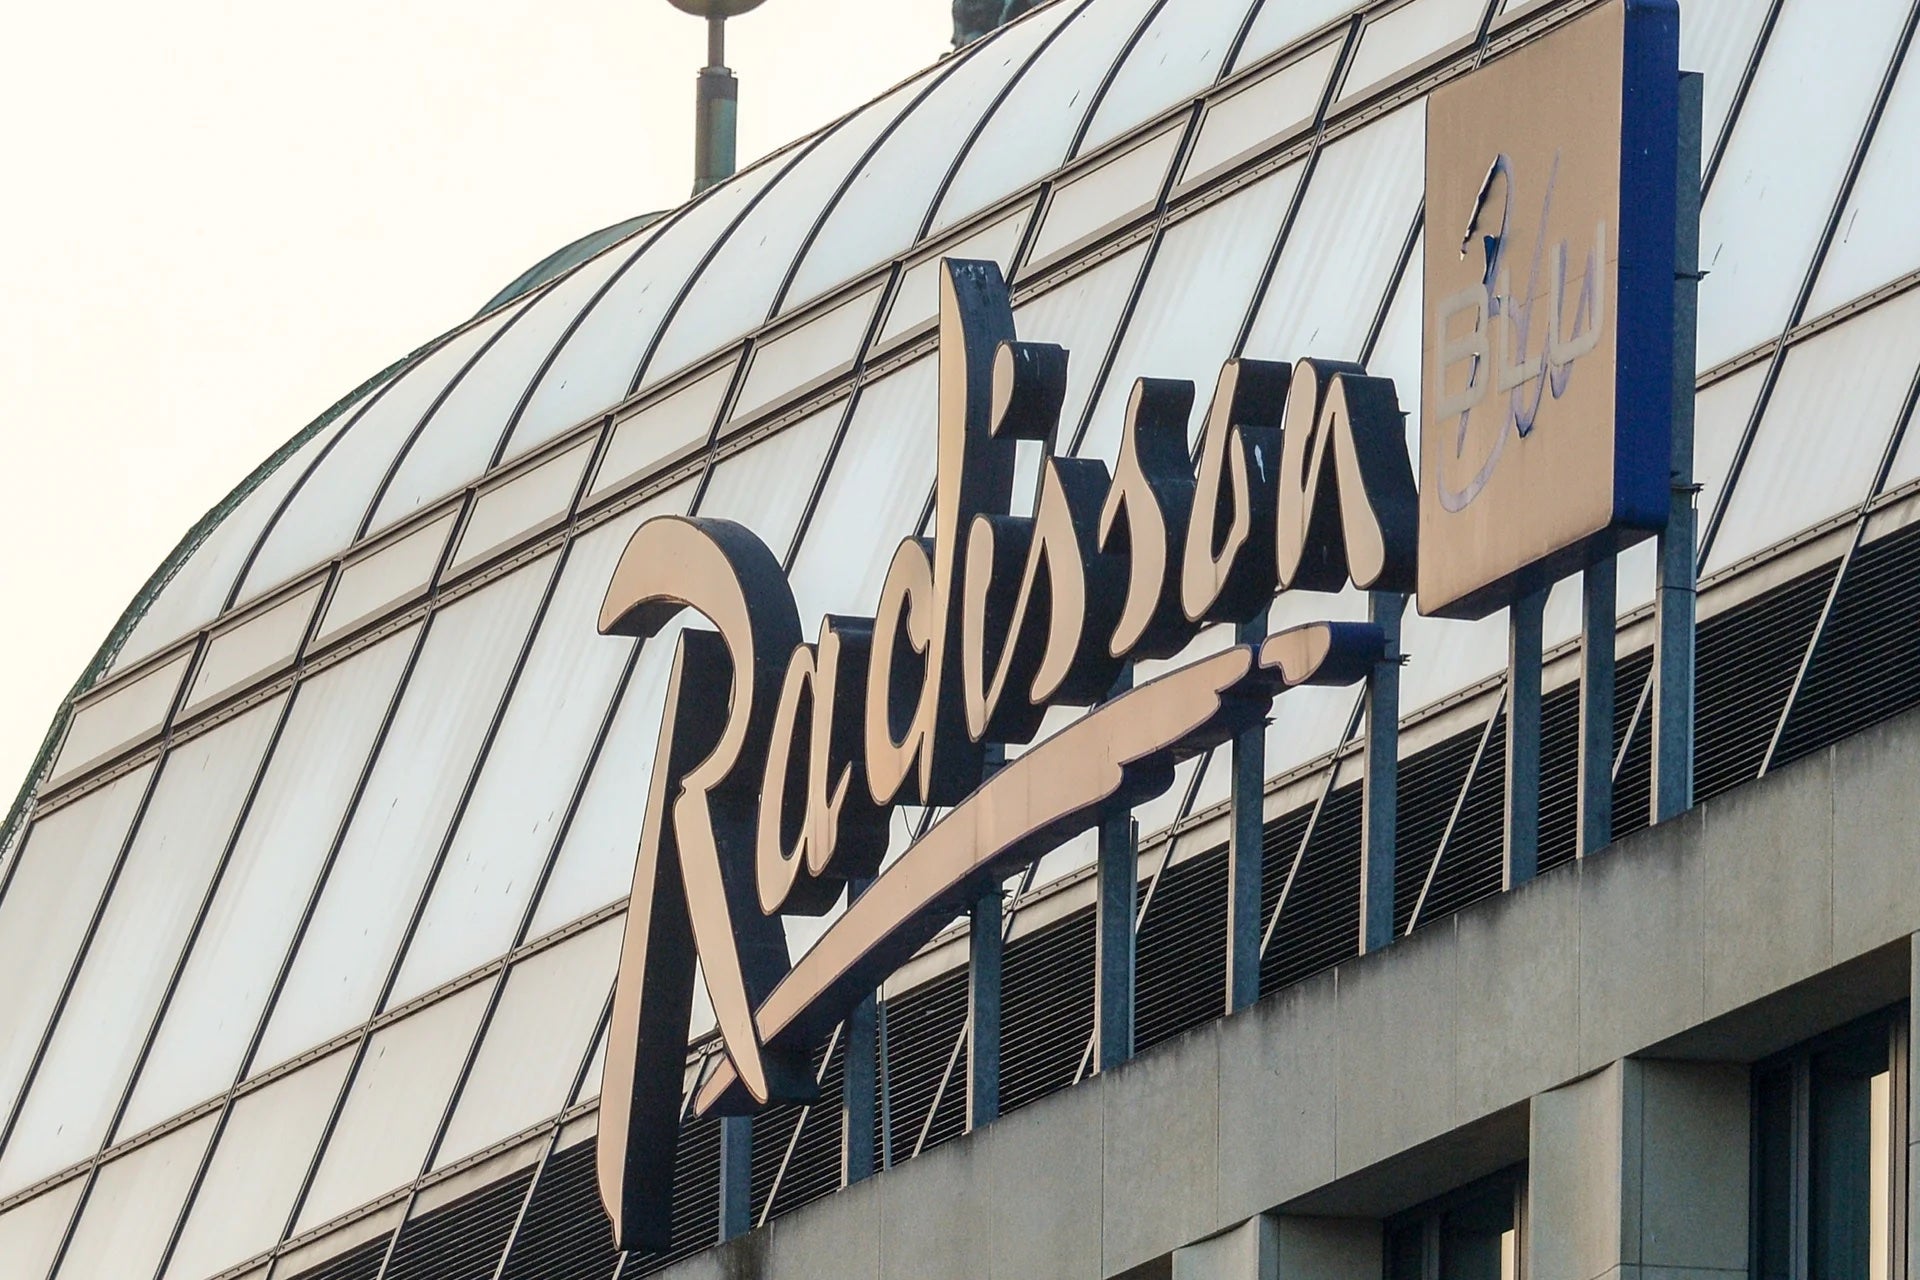 Radisson-Blu-sign-on-a-building